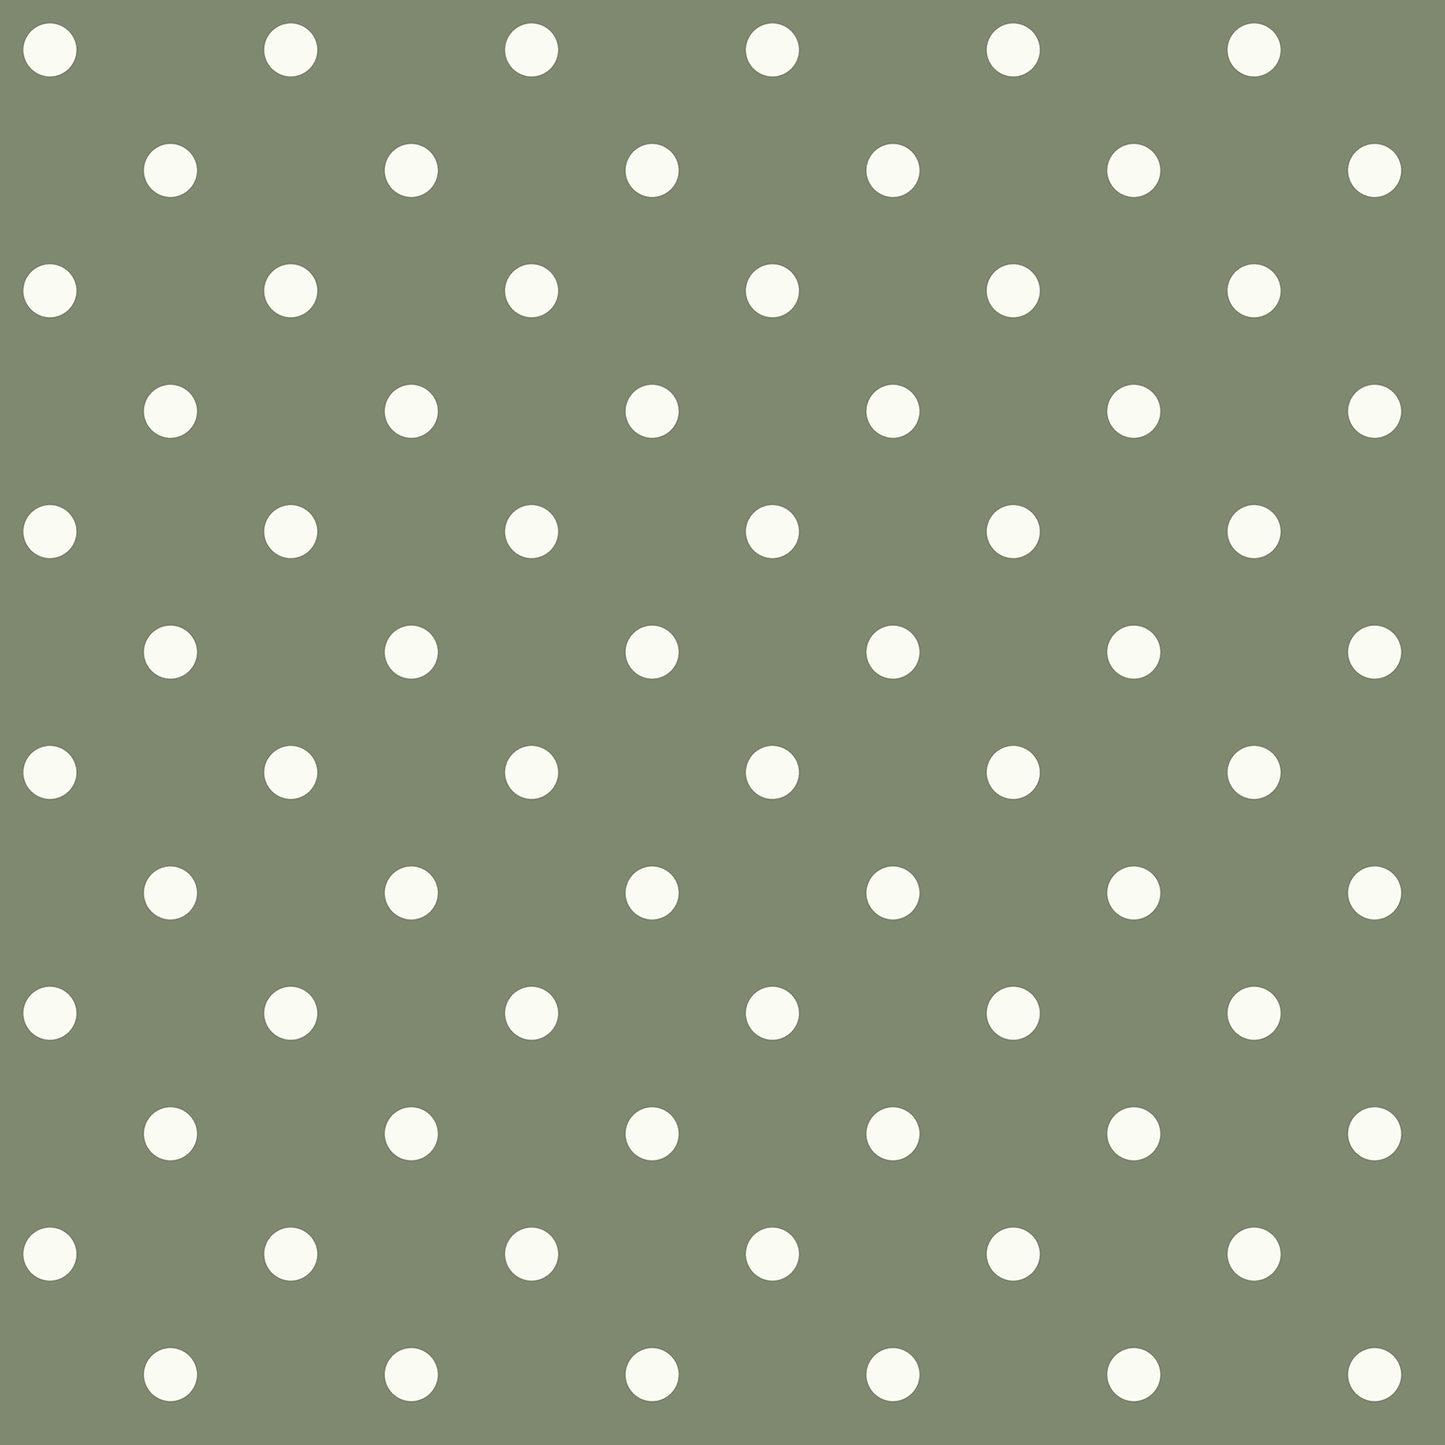 green polka dots